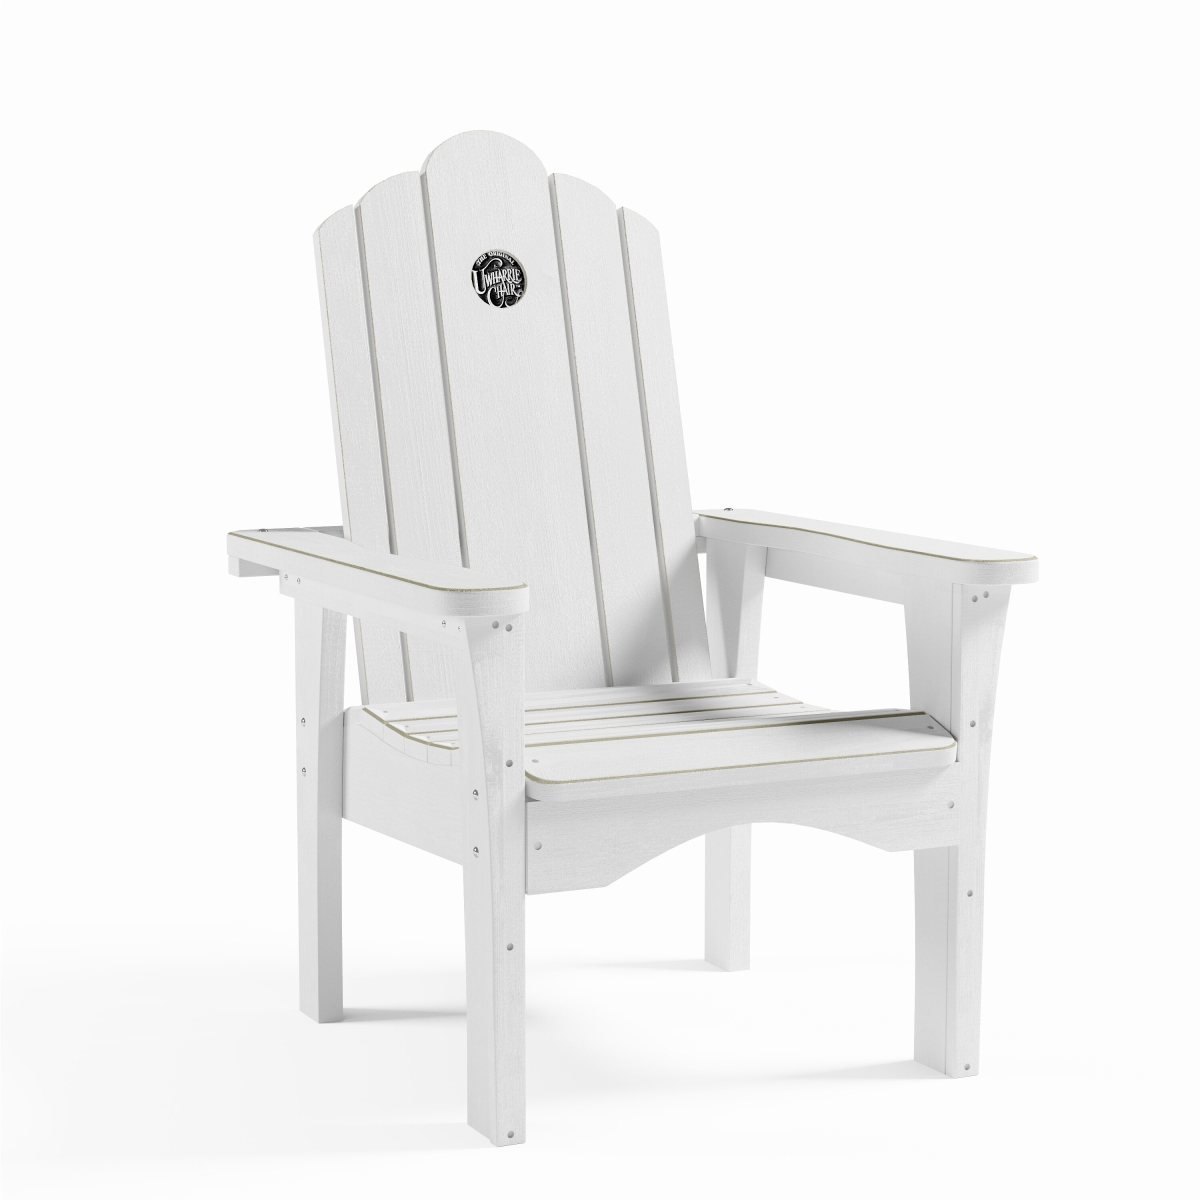 UWharrie Chair S114-P13 Original Wood Lounge Chair, White Polymer - 30.5 x 33.5 x 43.5 in.